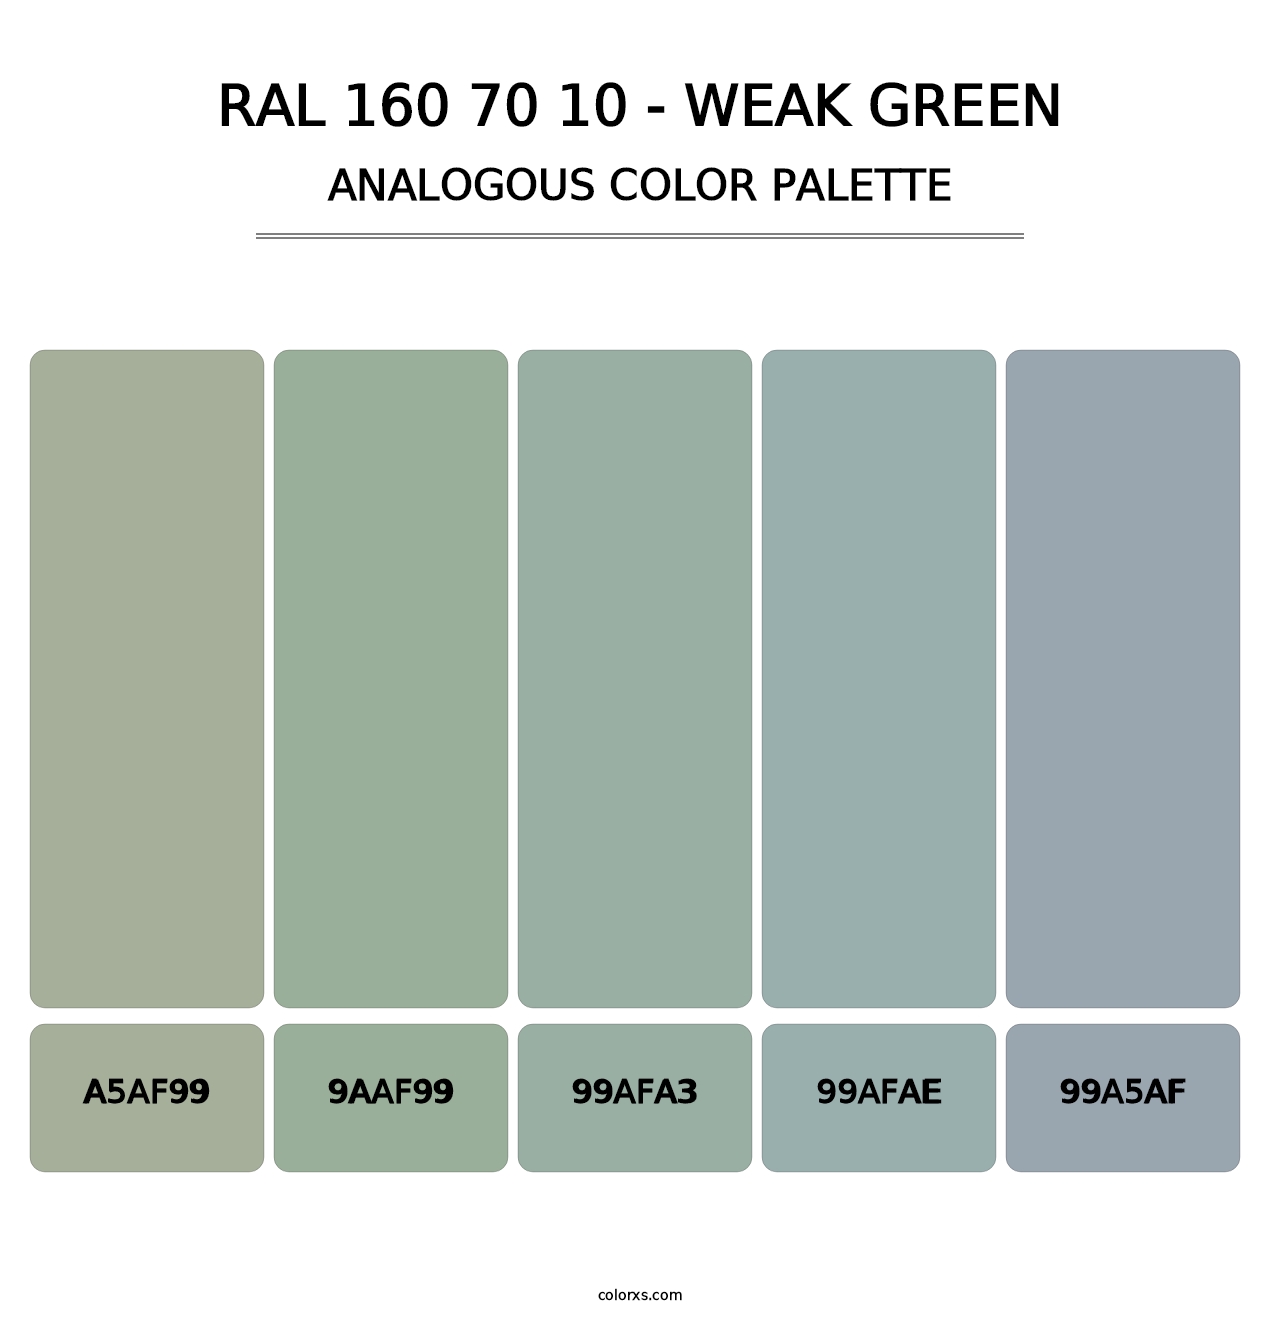 RAL 160 70 10 - Weak Green - Analogous Color Palette